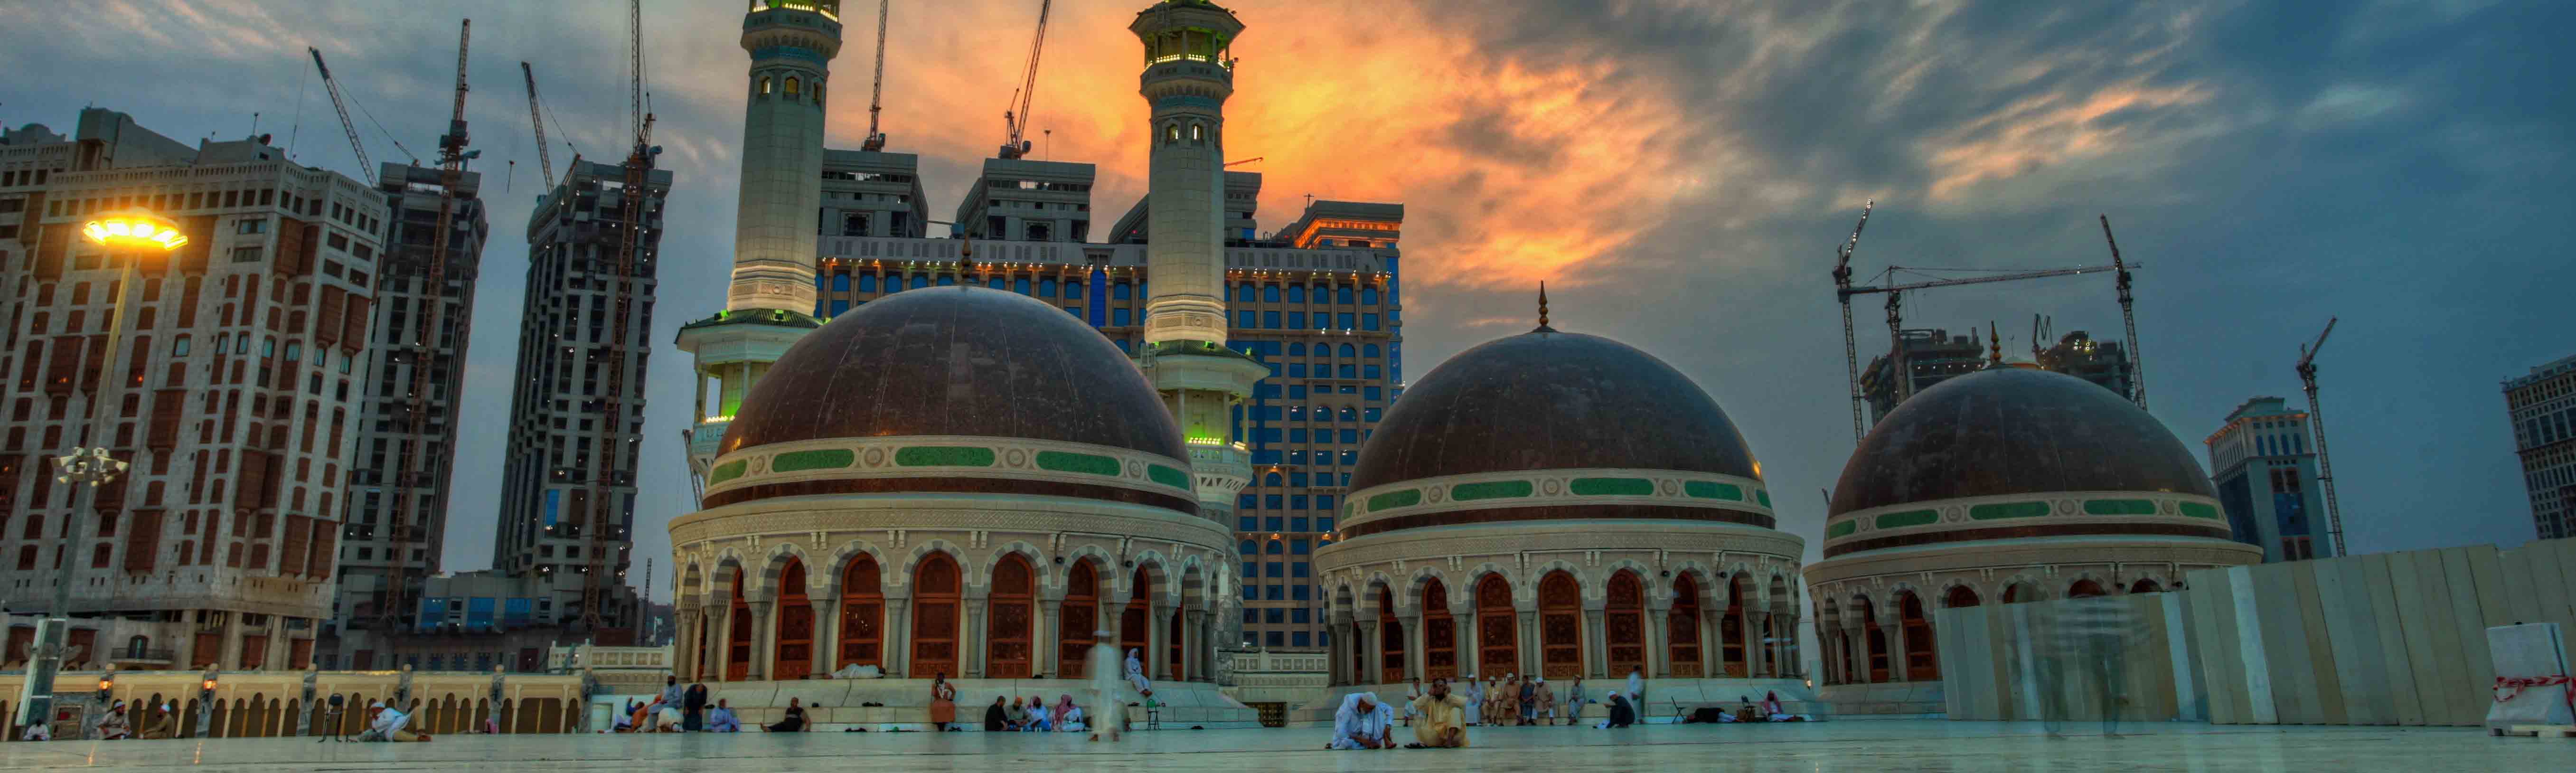 Mosque Mecca Saudi Arabia Sunset